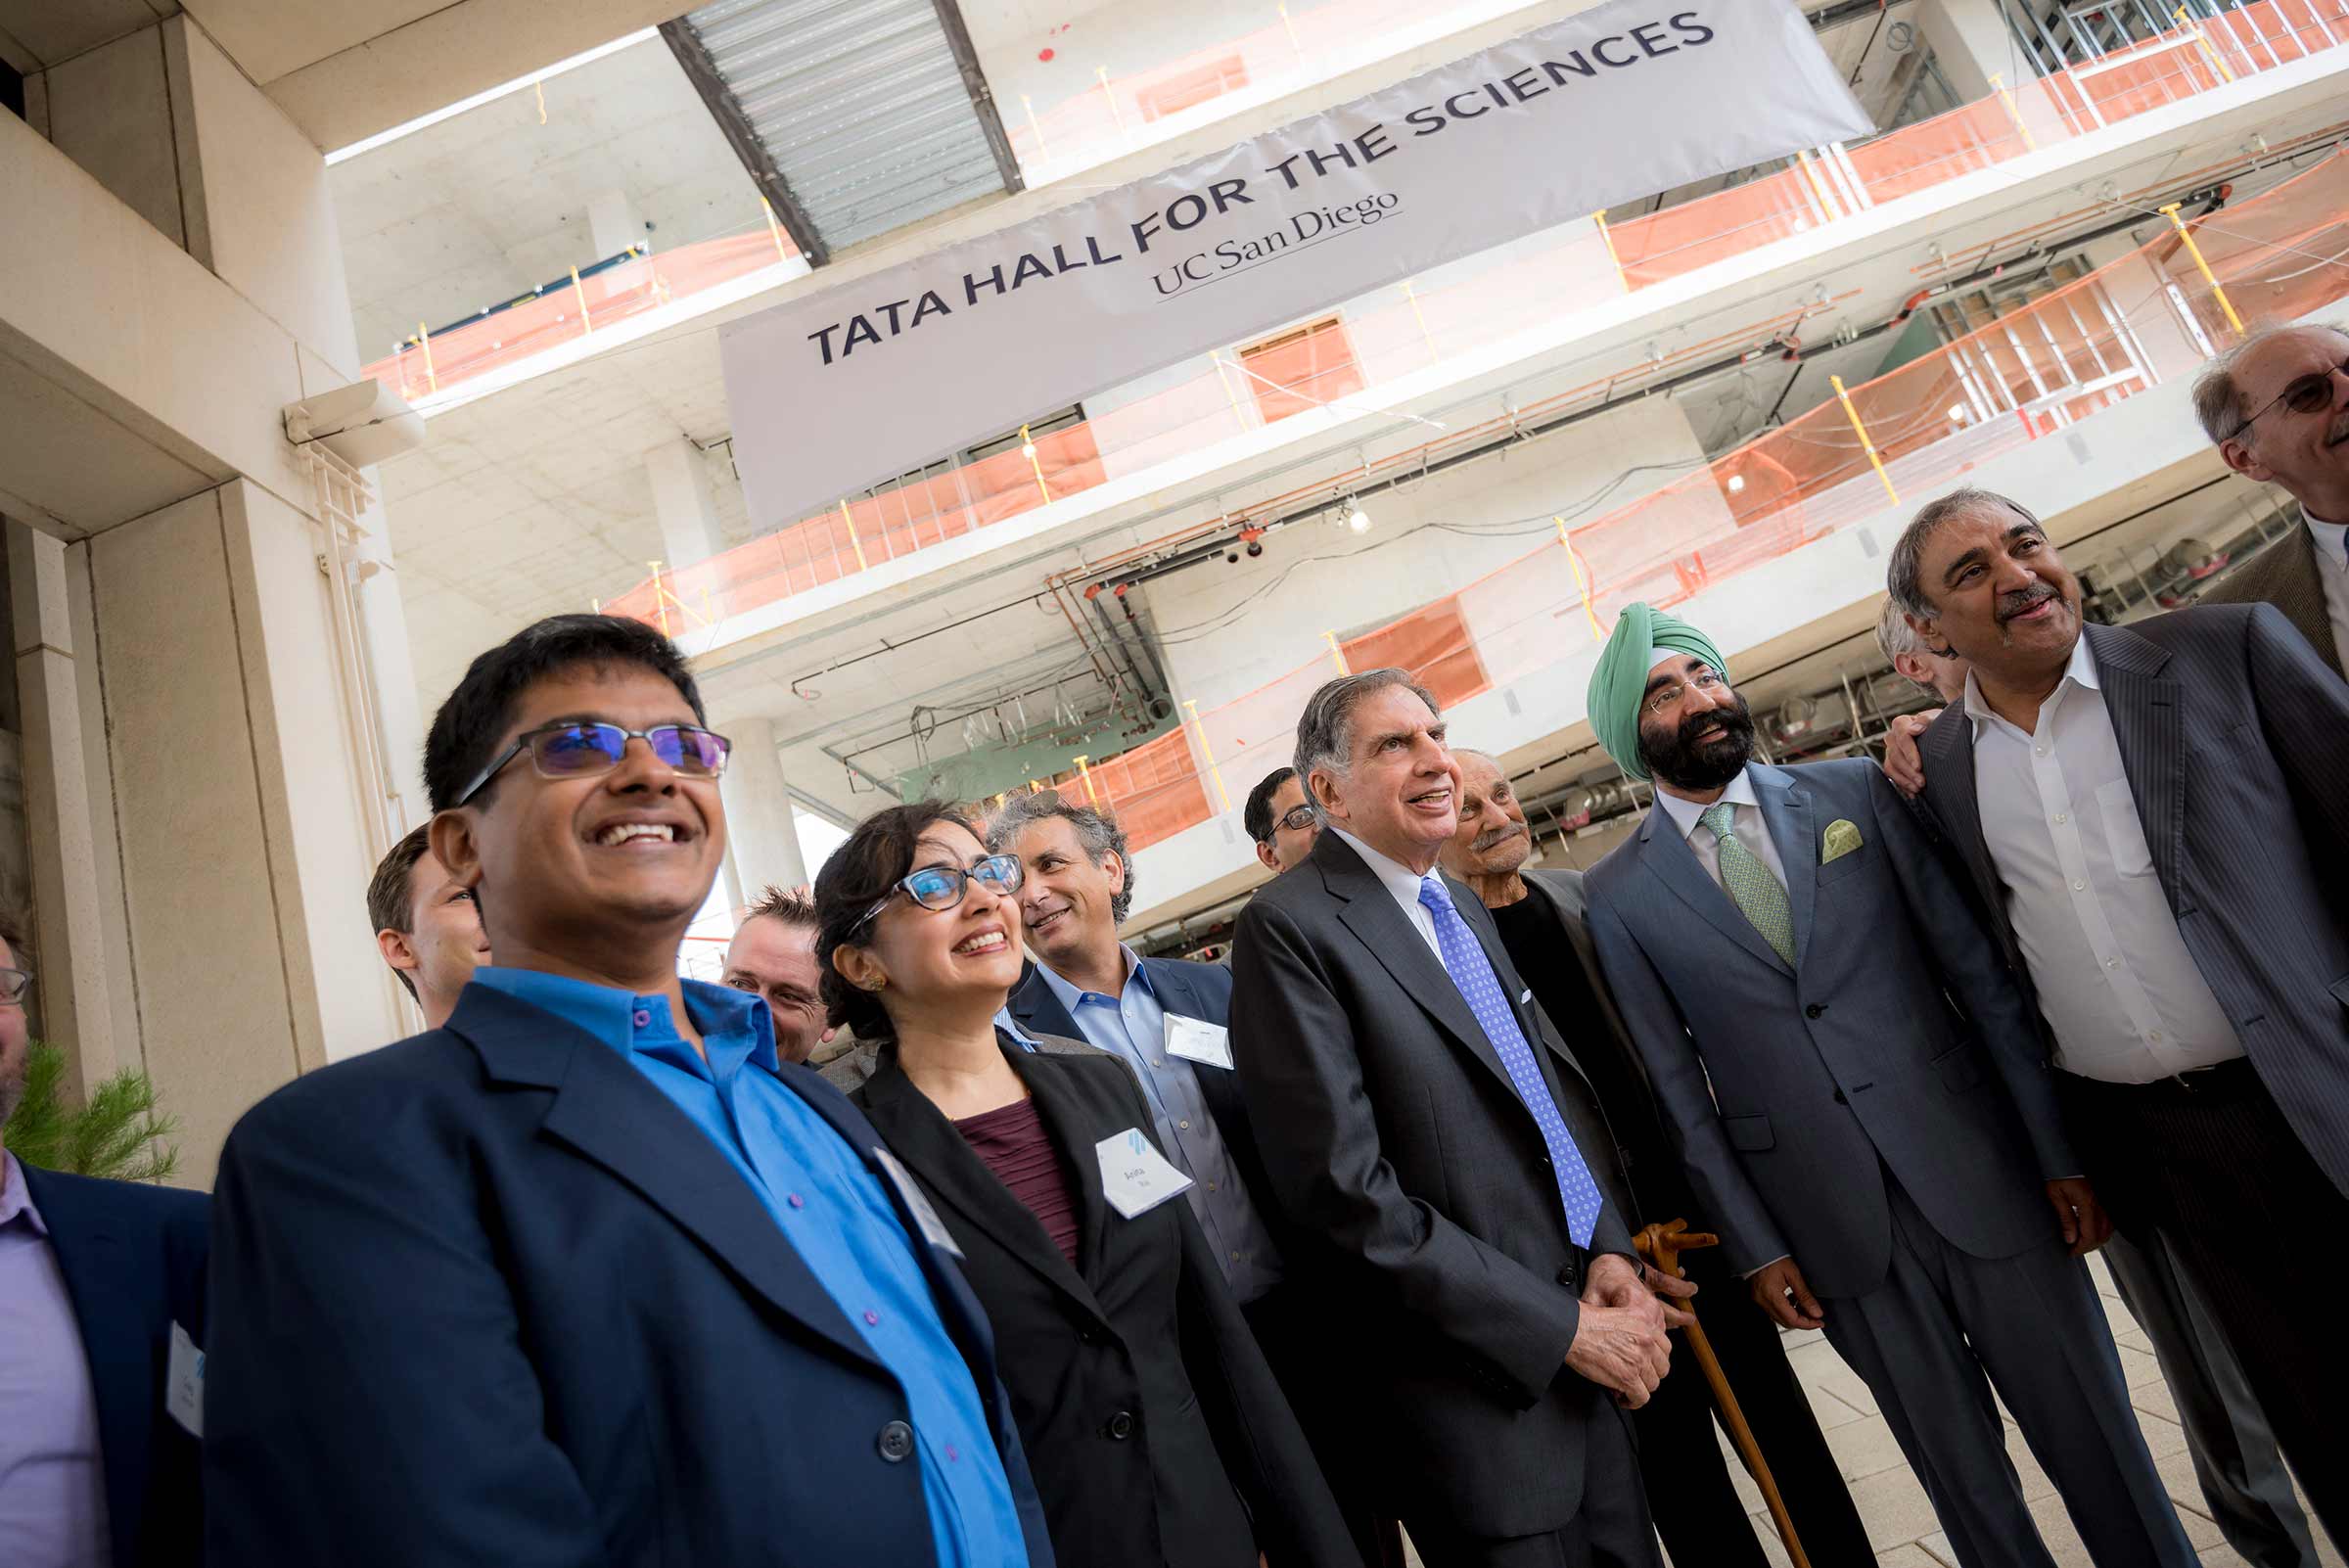 Dedication of Tata Hall with Anita Raj and Karthik Muralidharan